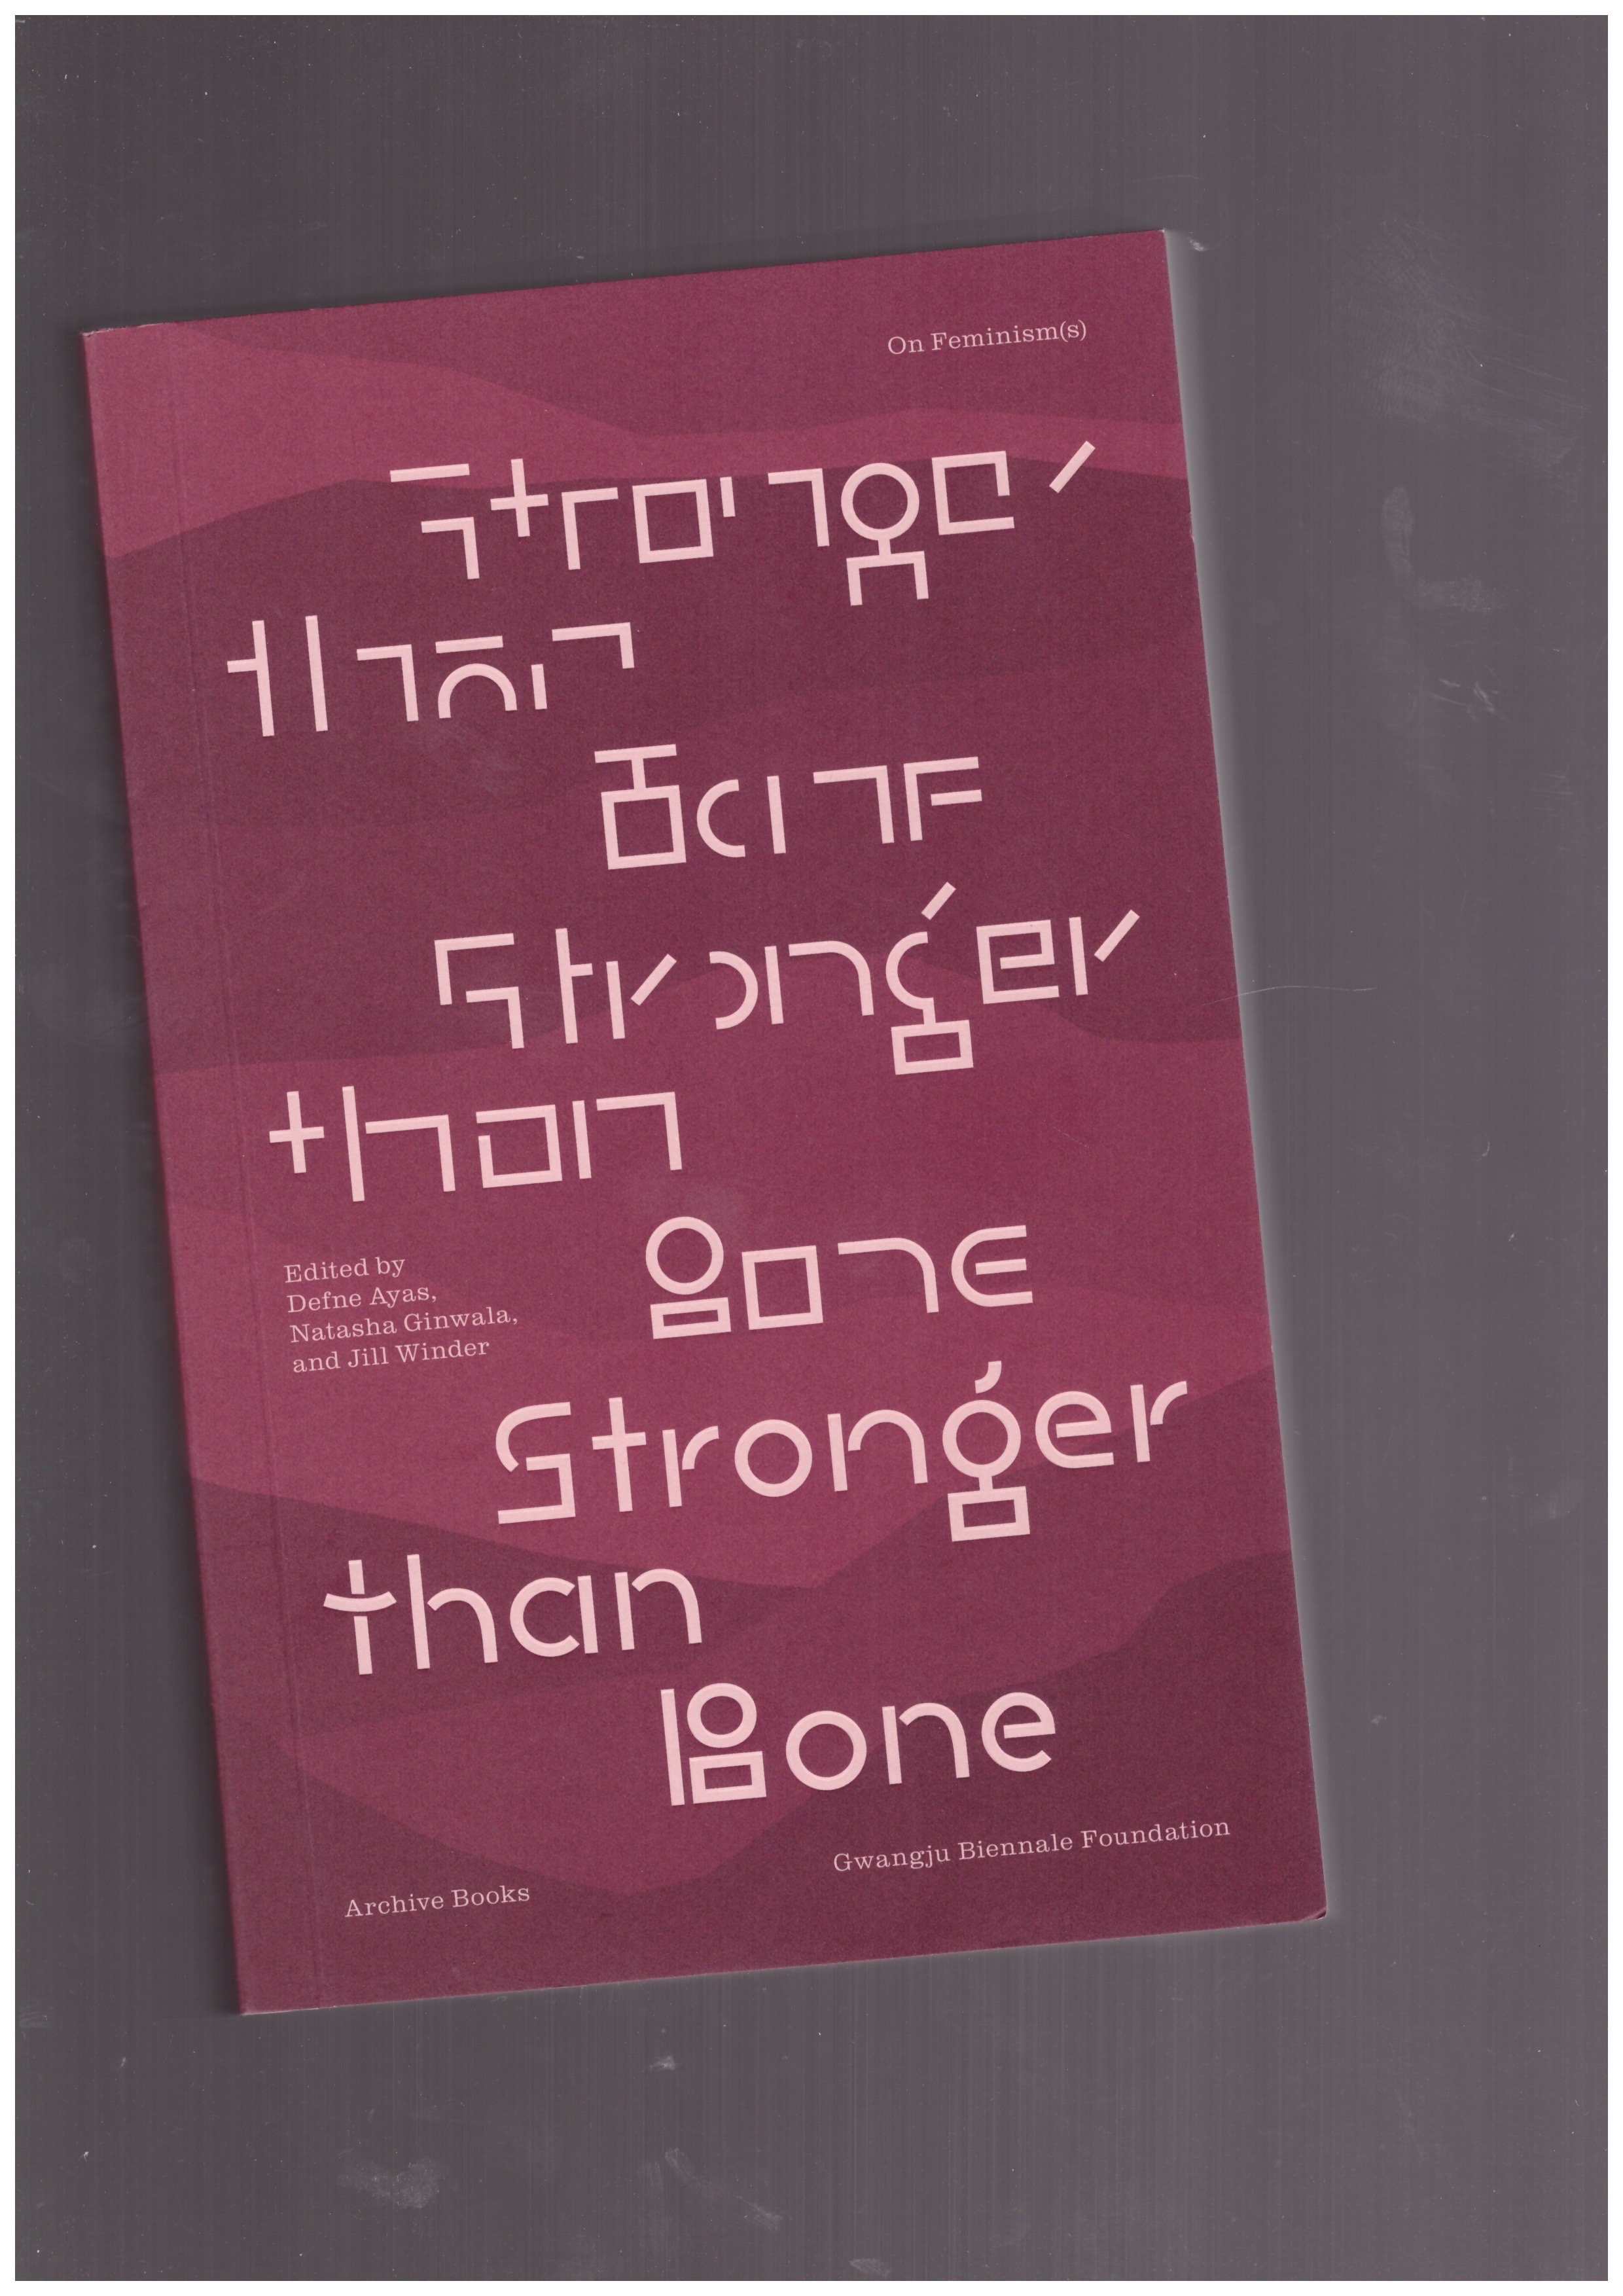 AYAS, Dafne; GINWALA, Natasha; WINDER, Jill (eds.) - Stronger Than Bone – On Feminism(s)